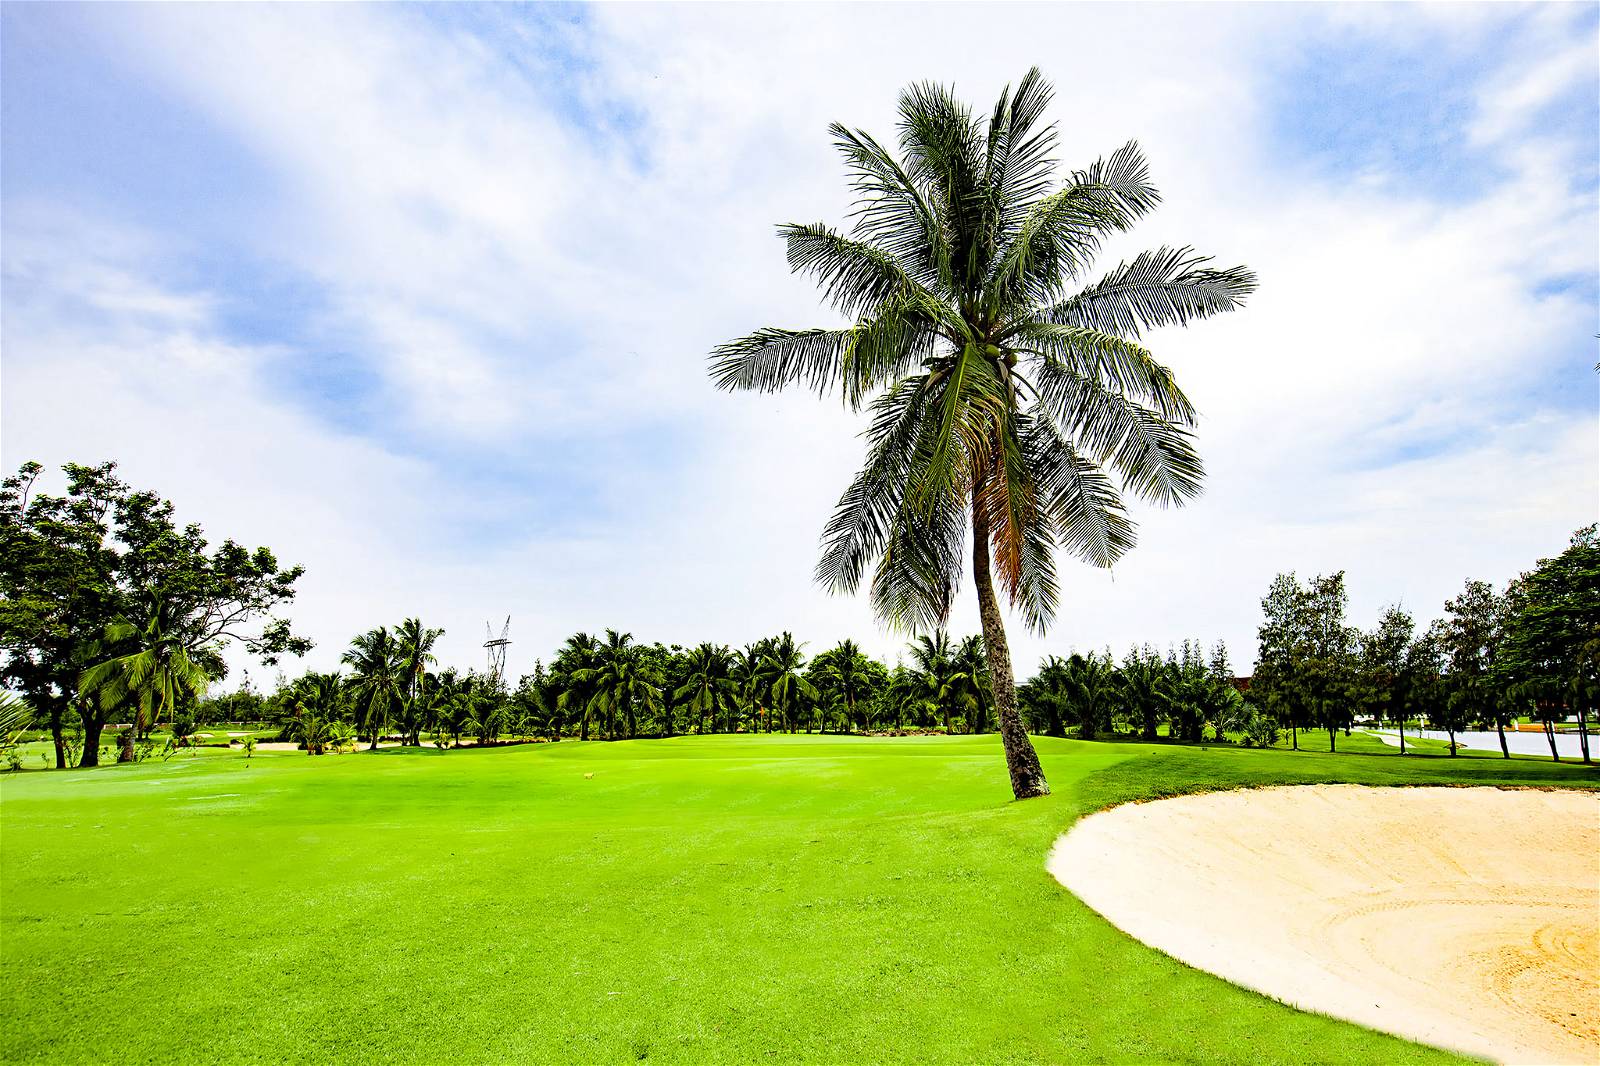 Fairway, Bunker, Royal Lakeside Golf Club, Pattaya, Thailand